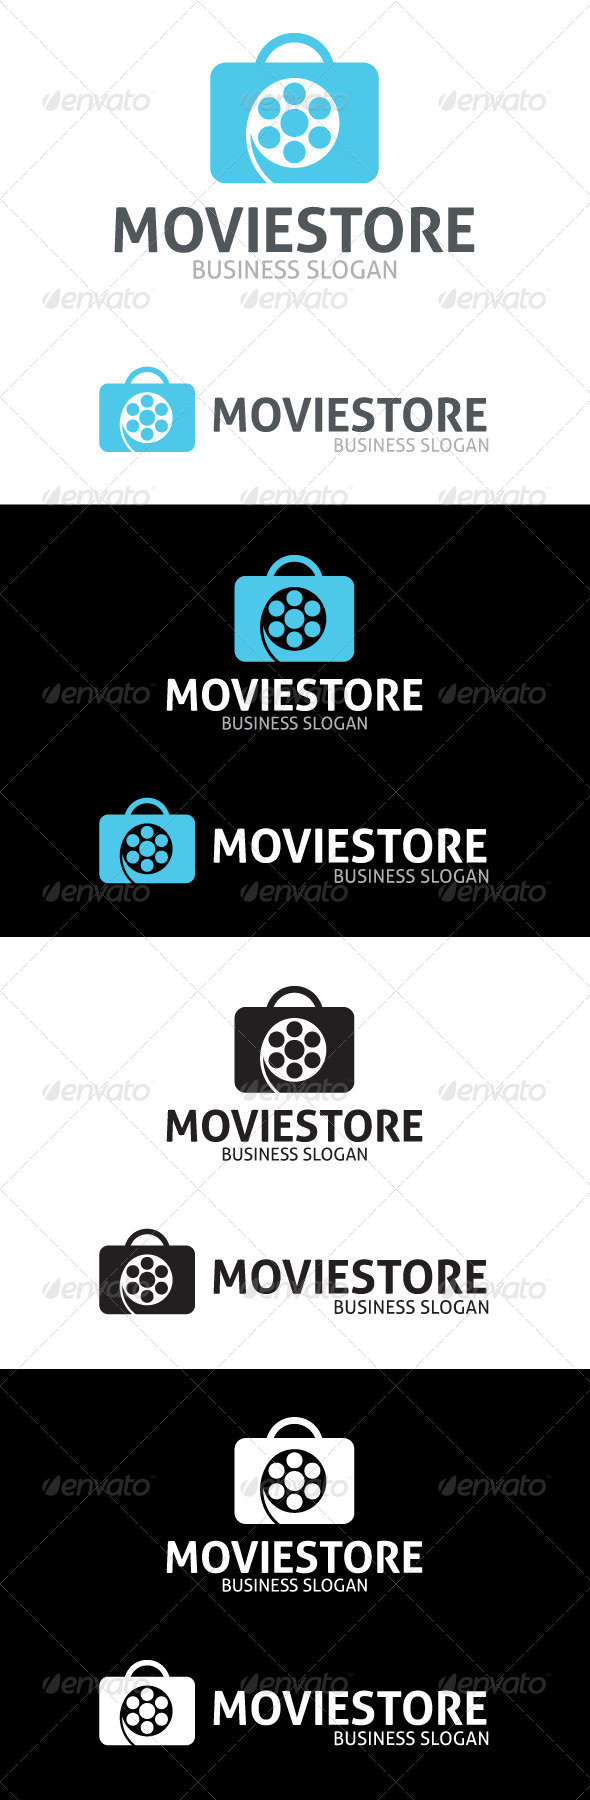 Movie Store Logo